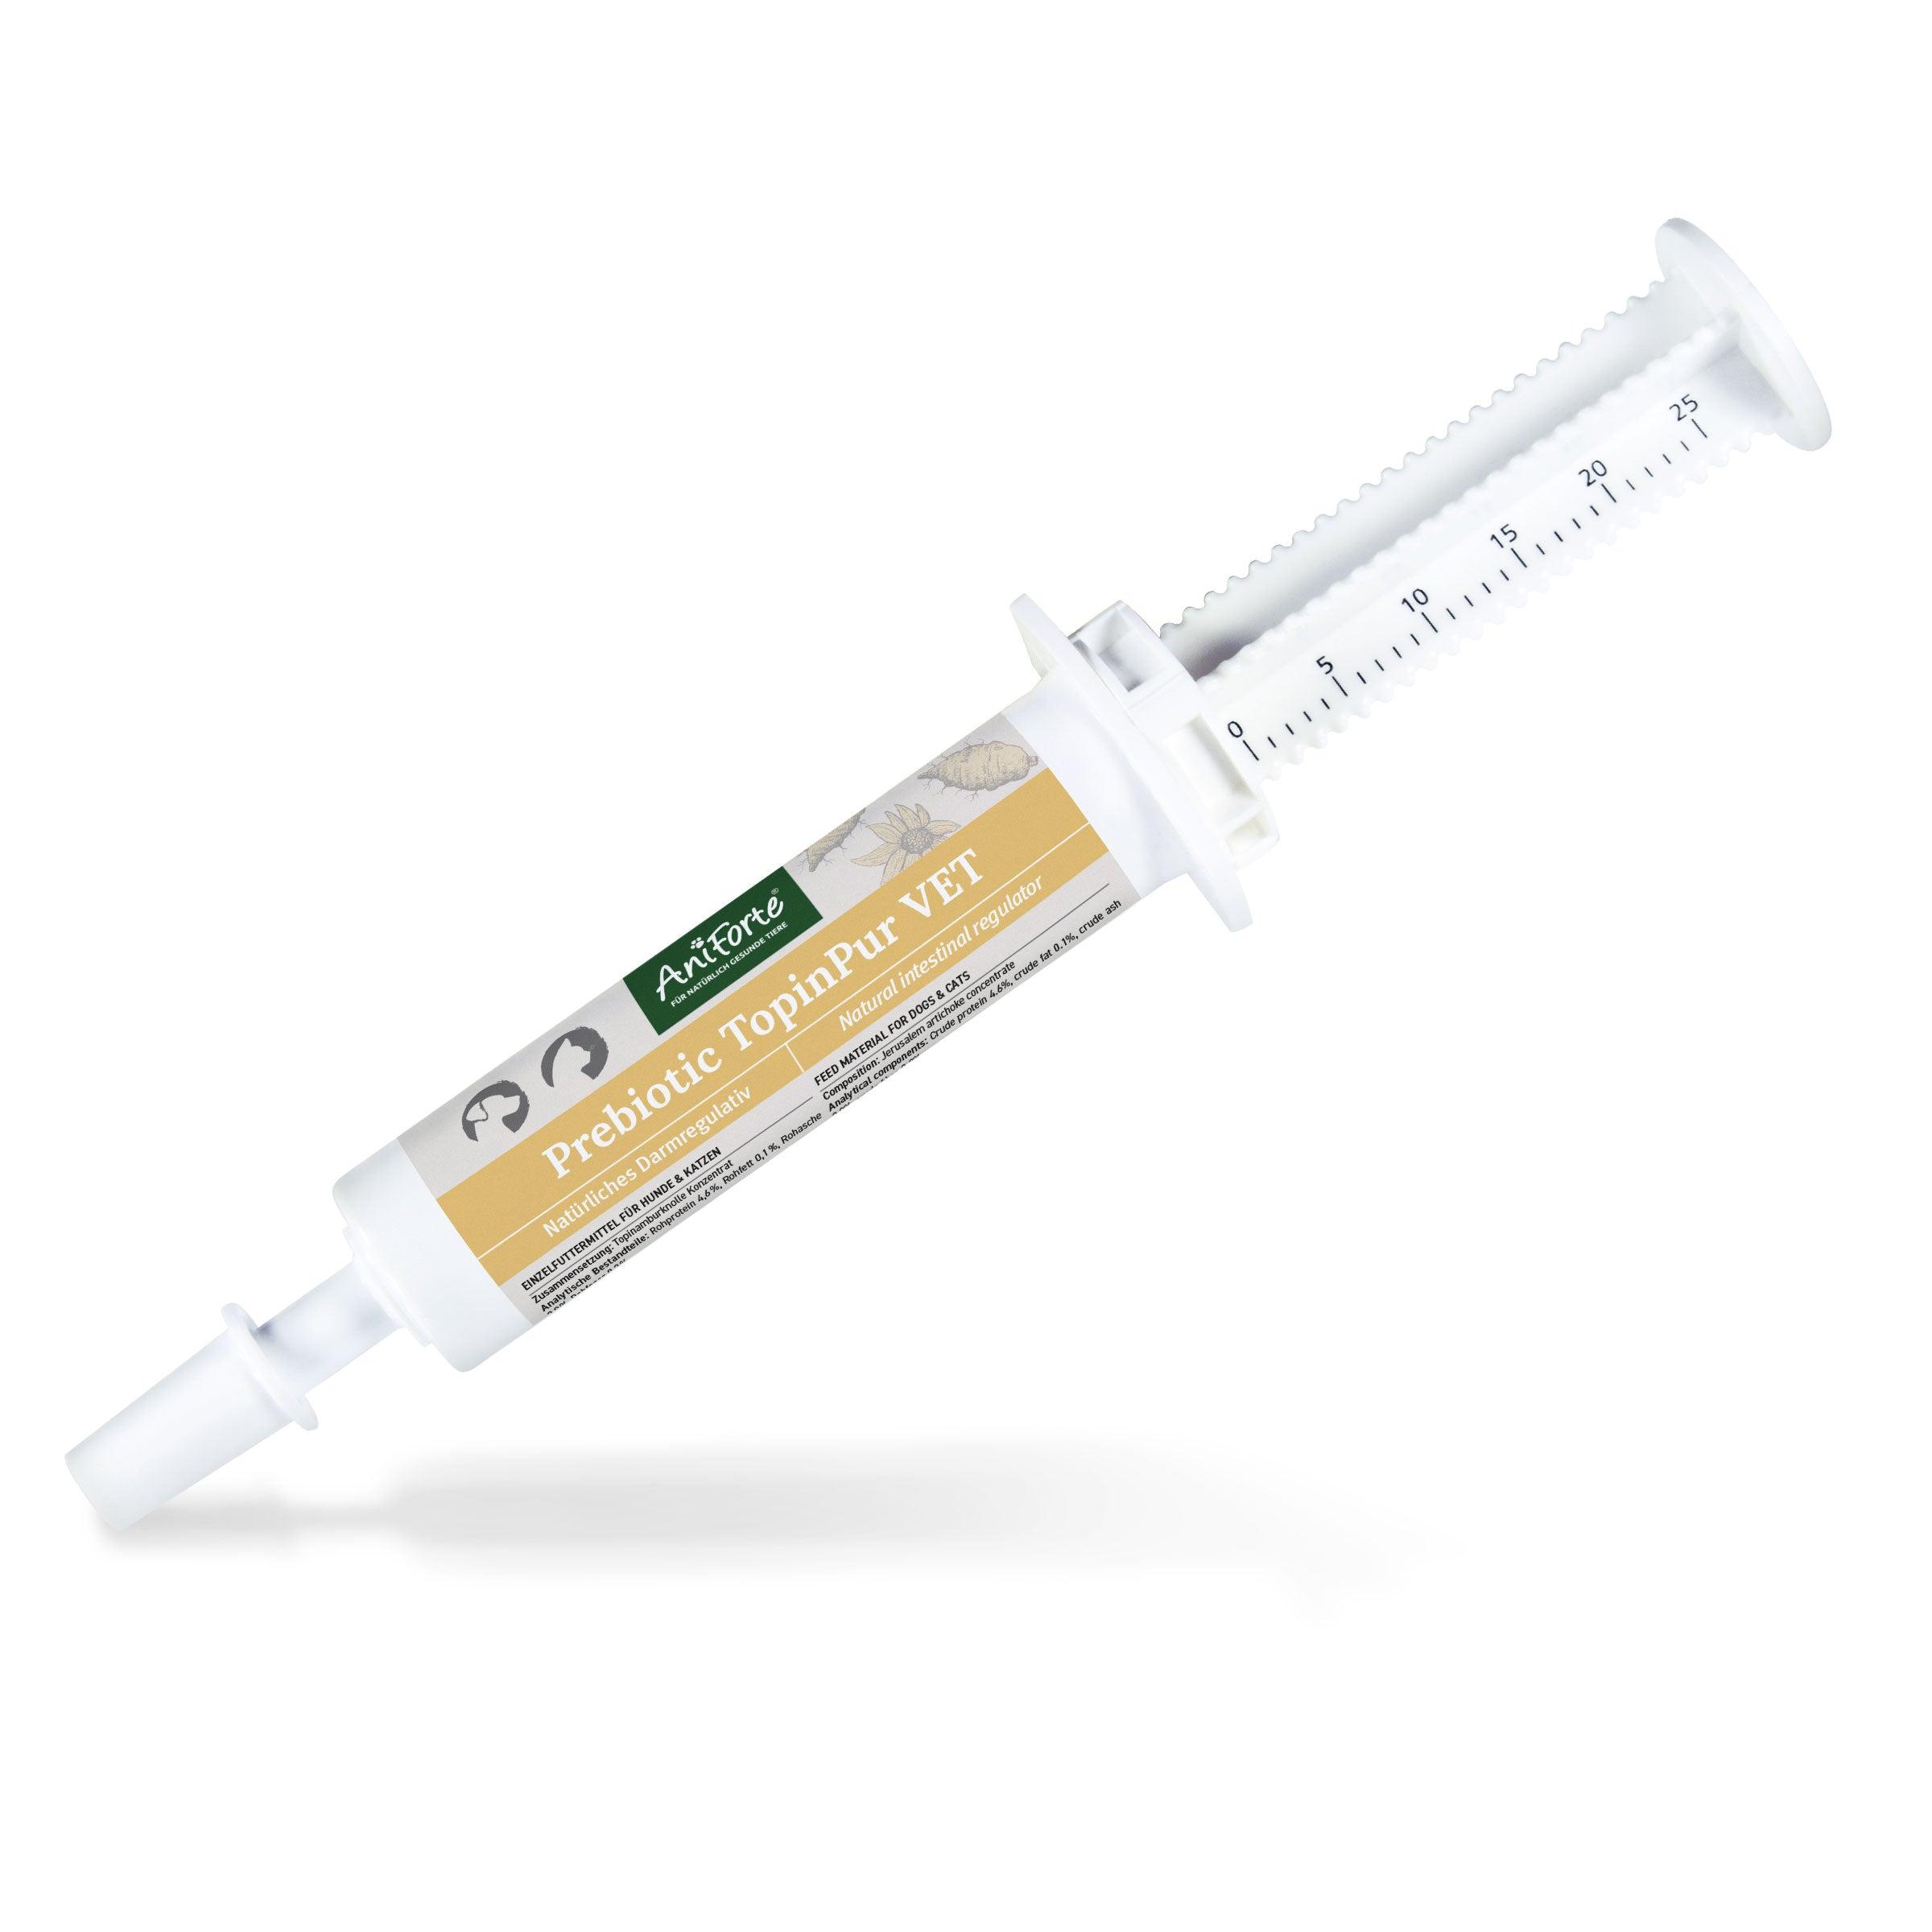 aniforte Prebiotic TopinPur VET - 30 Milliliter